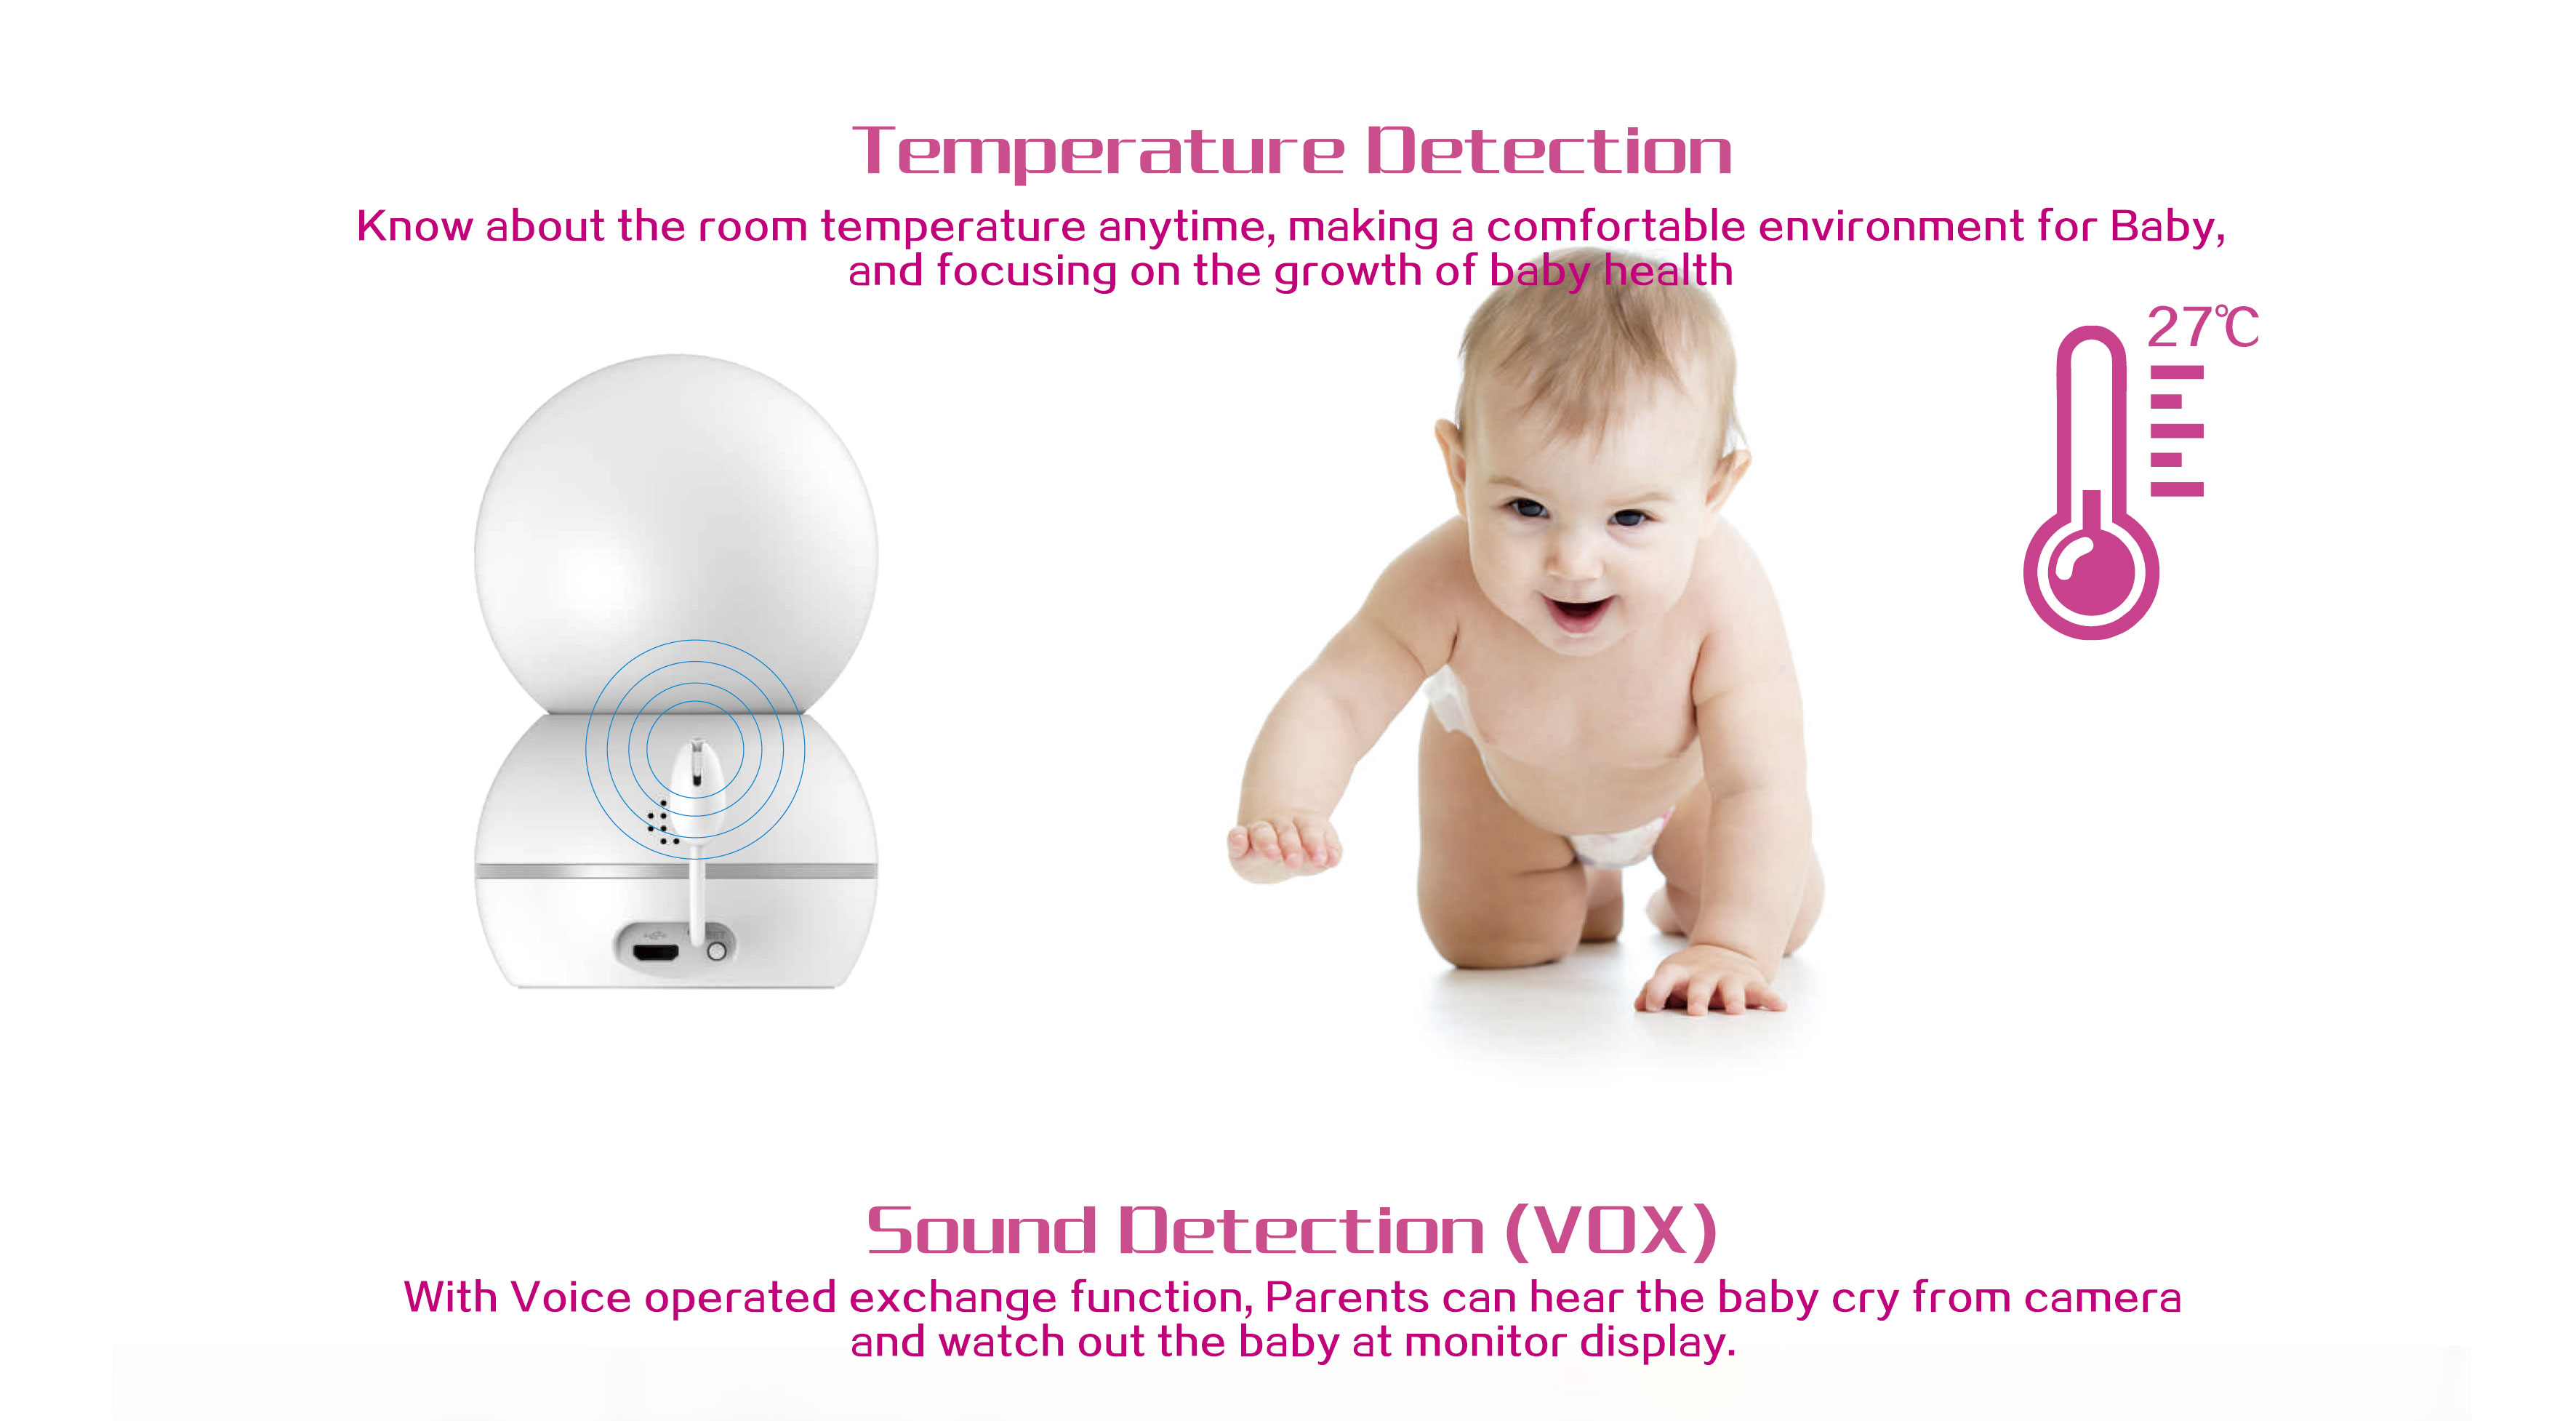 8210KL baby monitor